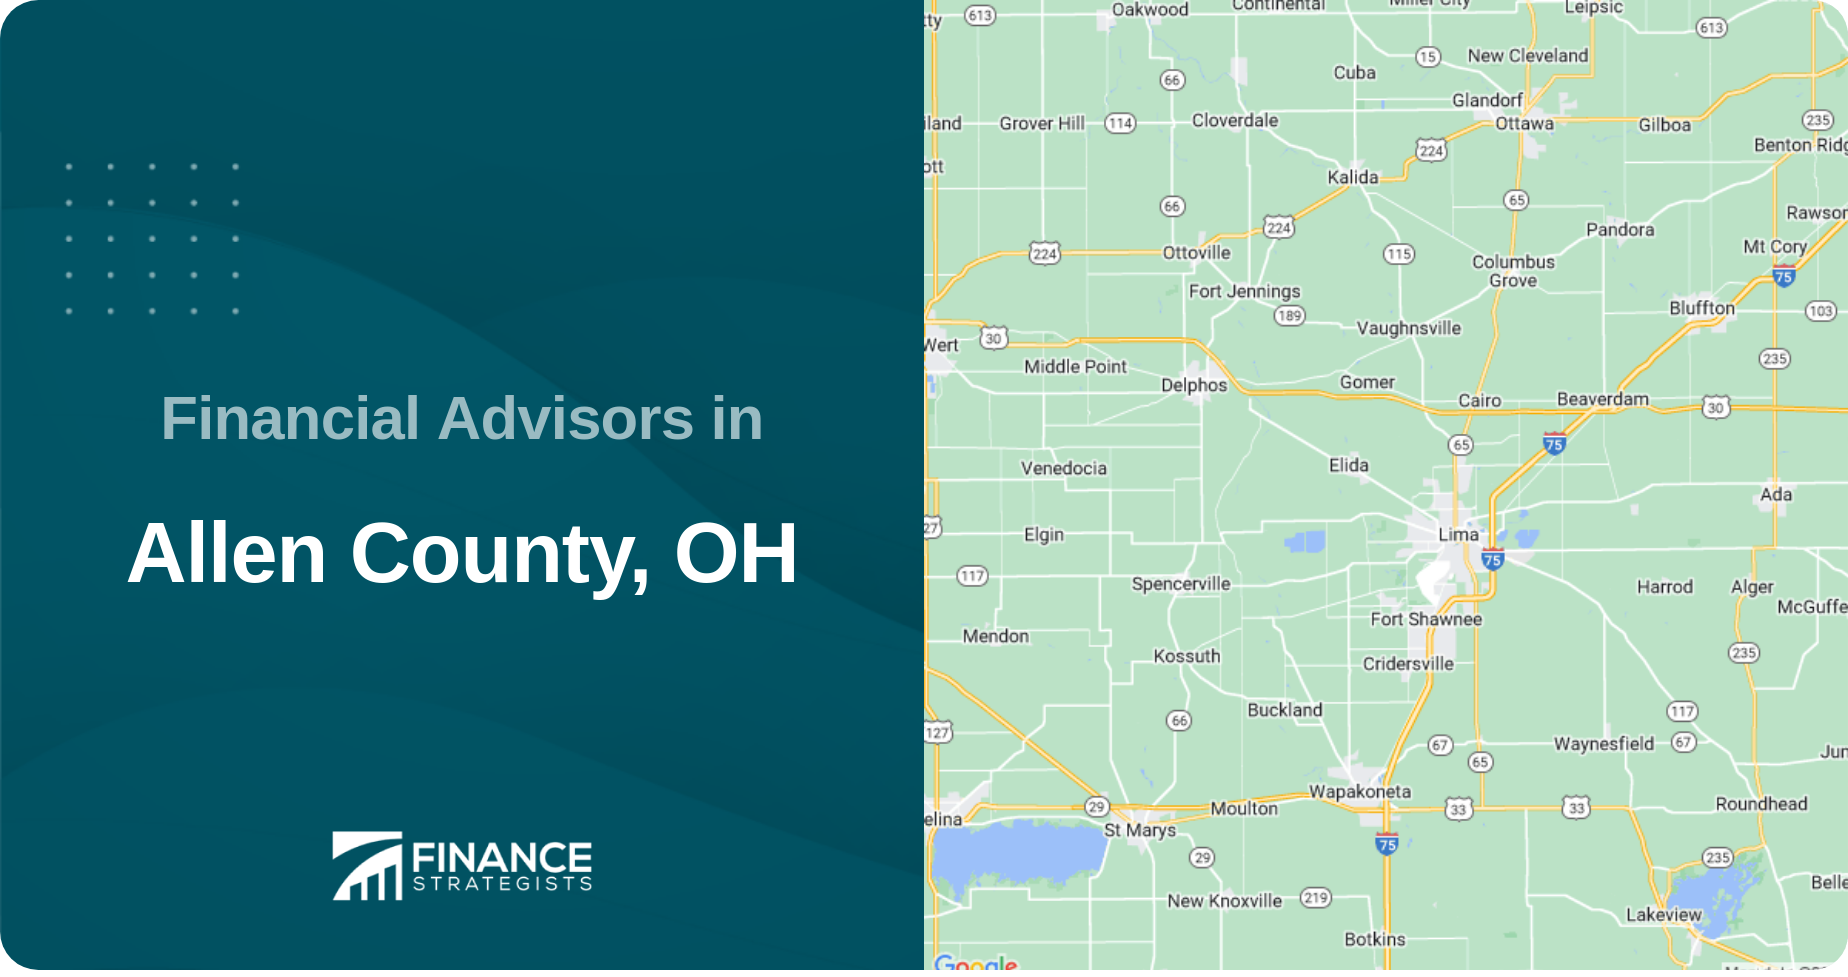 Financial Advisors in Allen County, OH